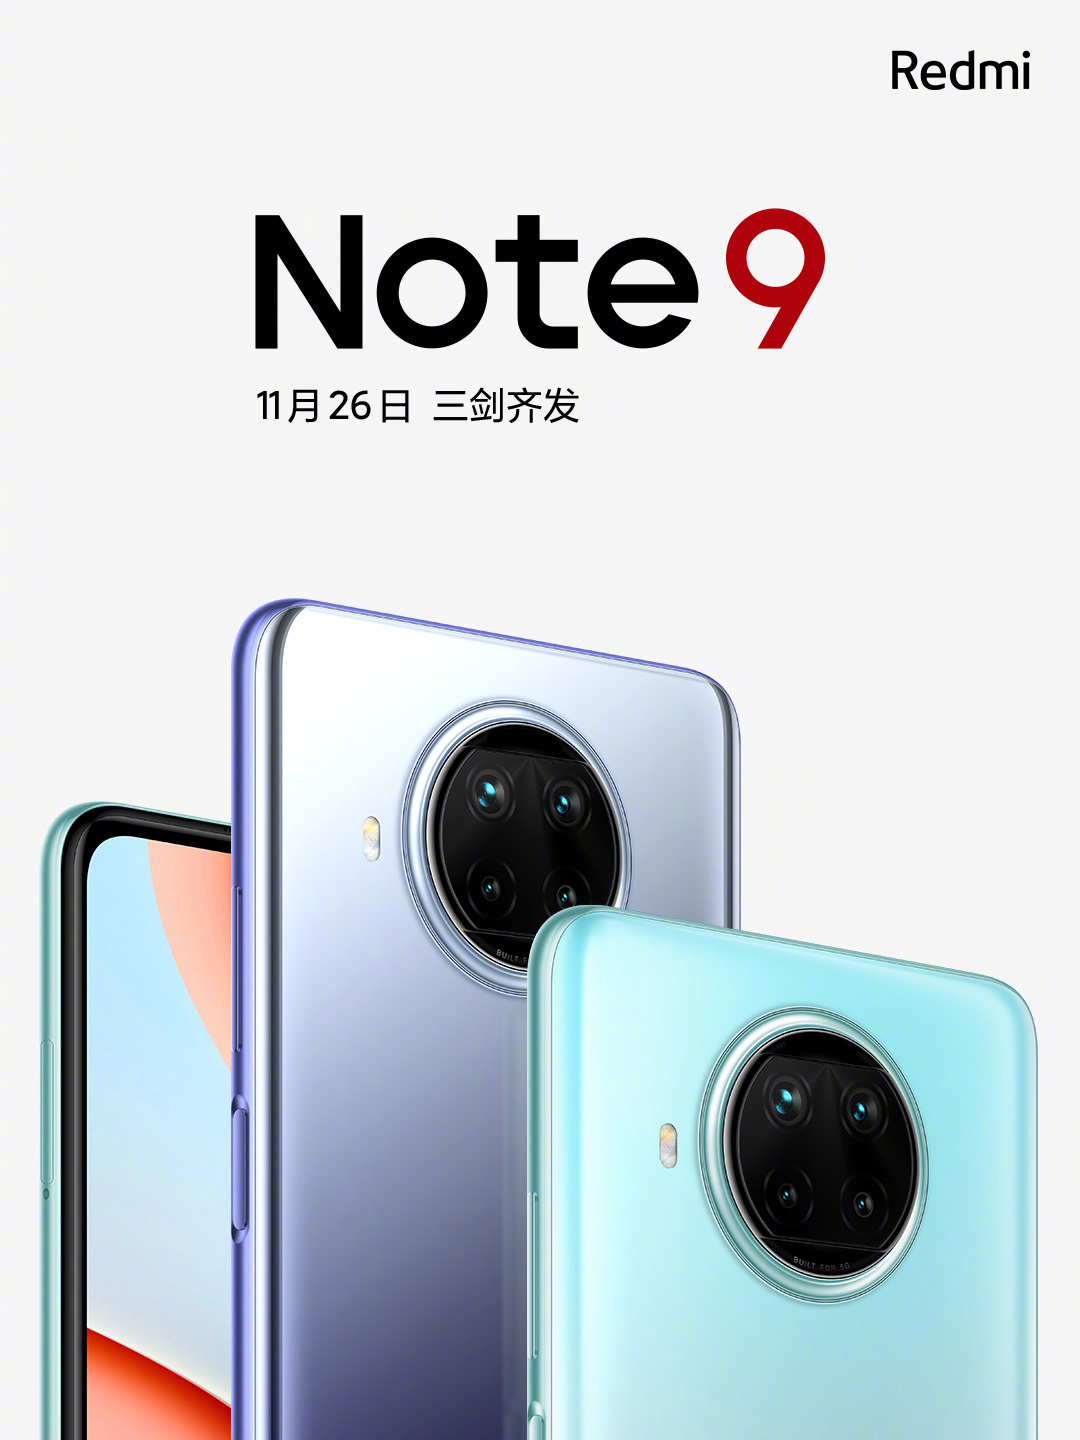 Upphafsdagur Redmi Note 9 5G seríunnar er 26. nóvember